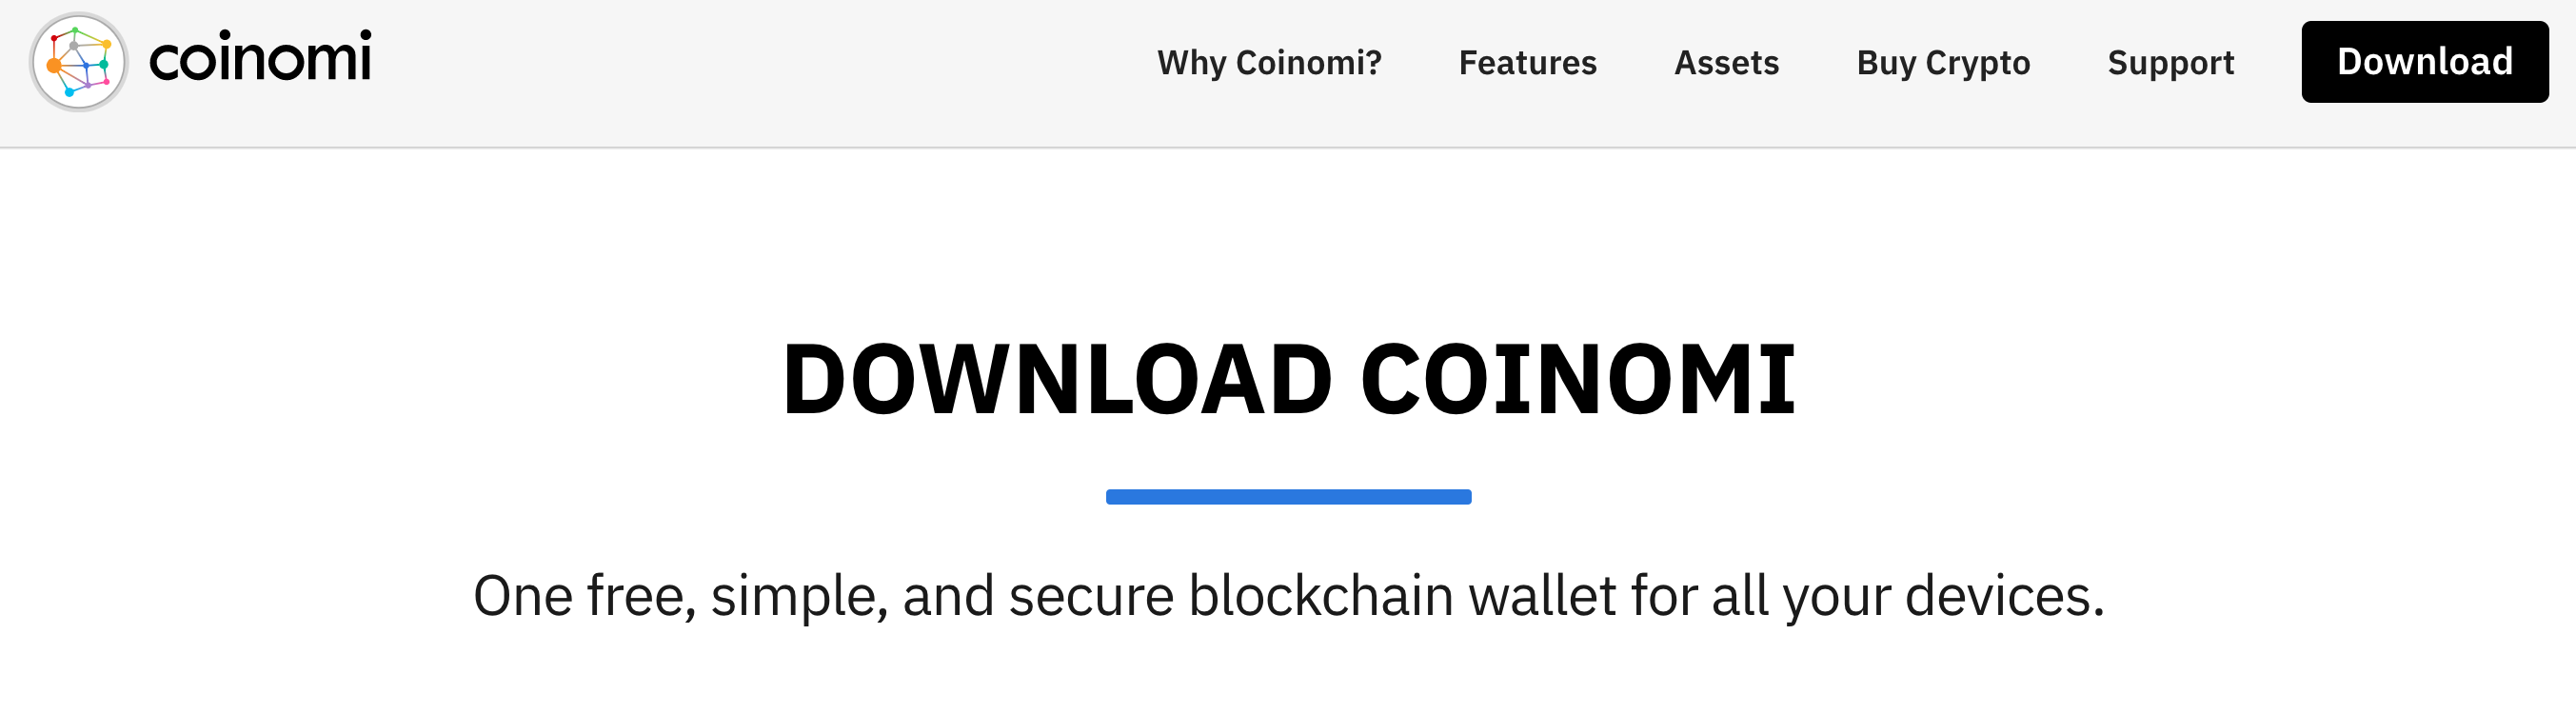 coinomi crypto wallet